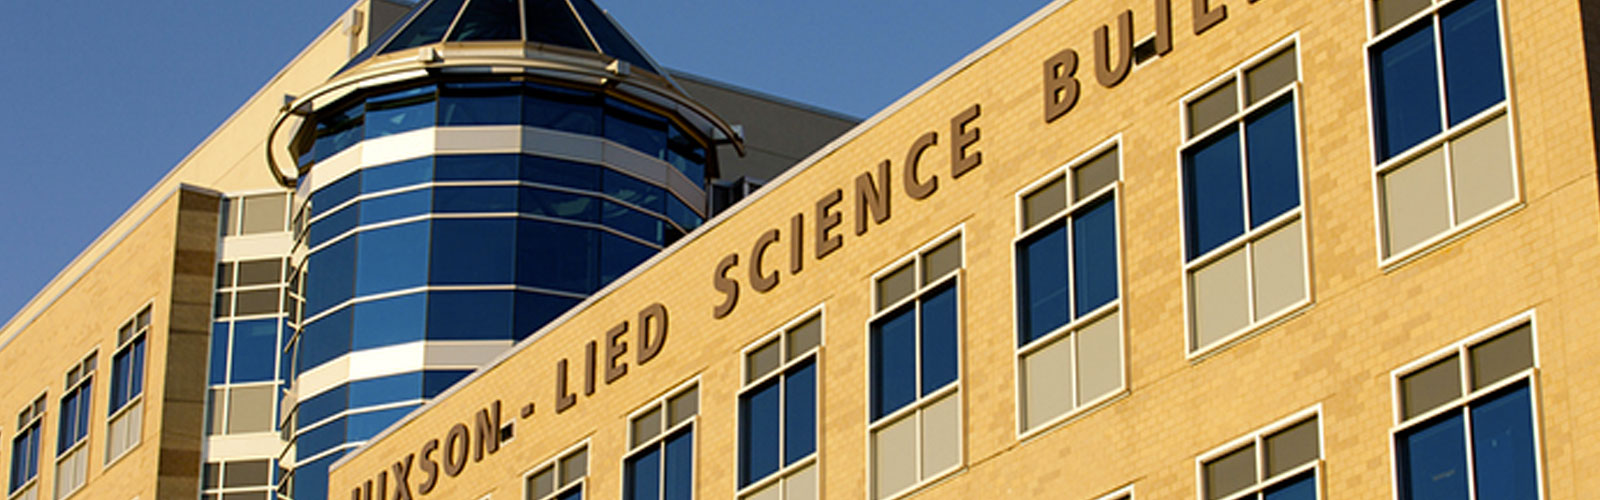 science building